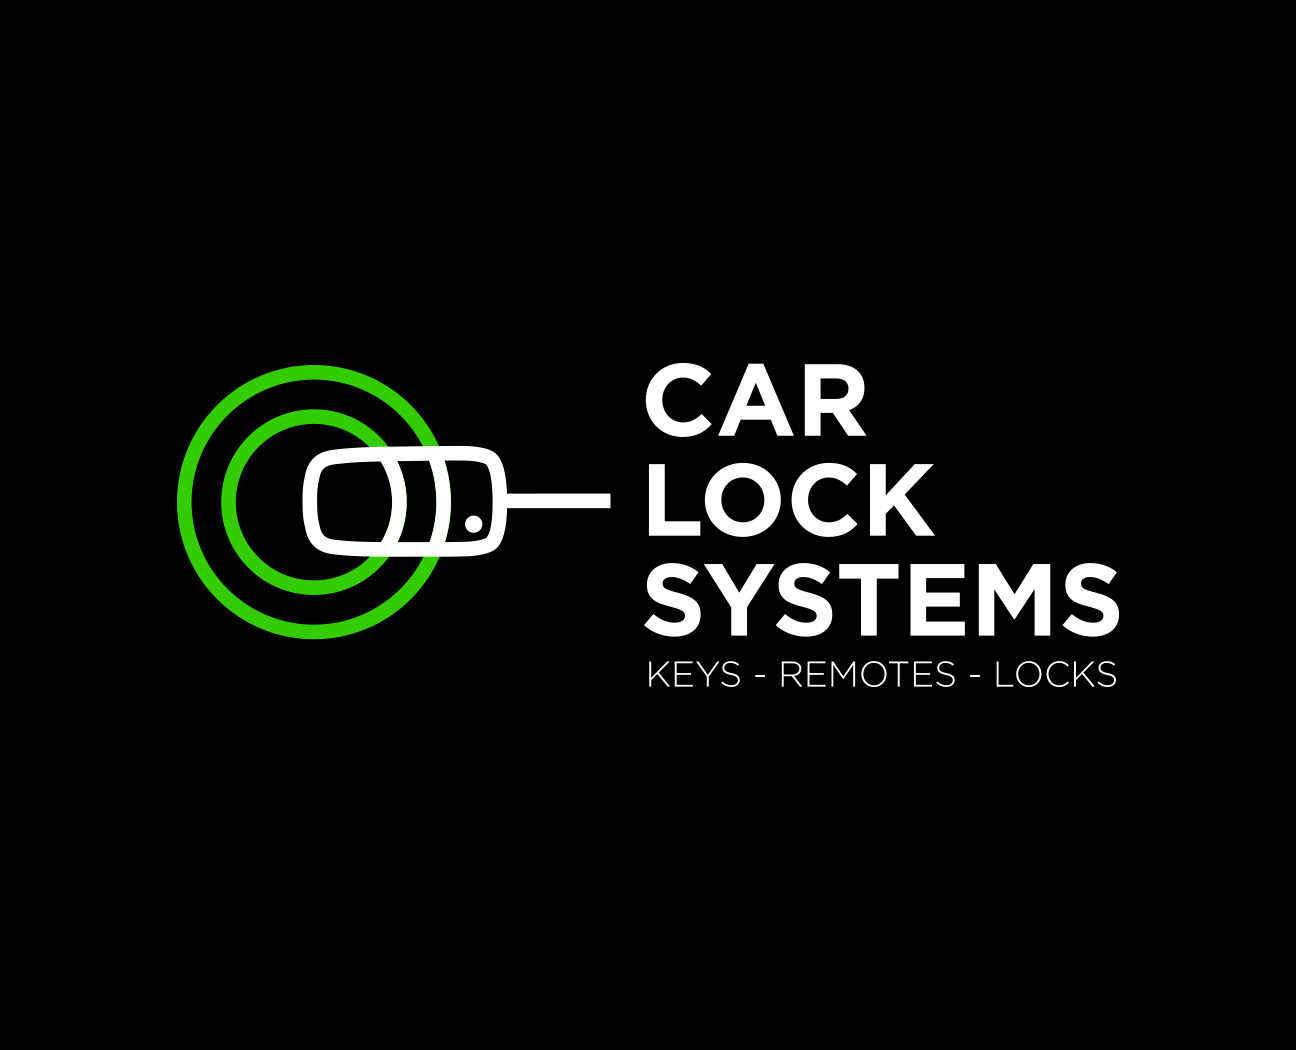 Studio-Broodnodig-carlocksystems-logo-huisstijl